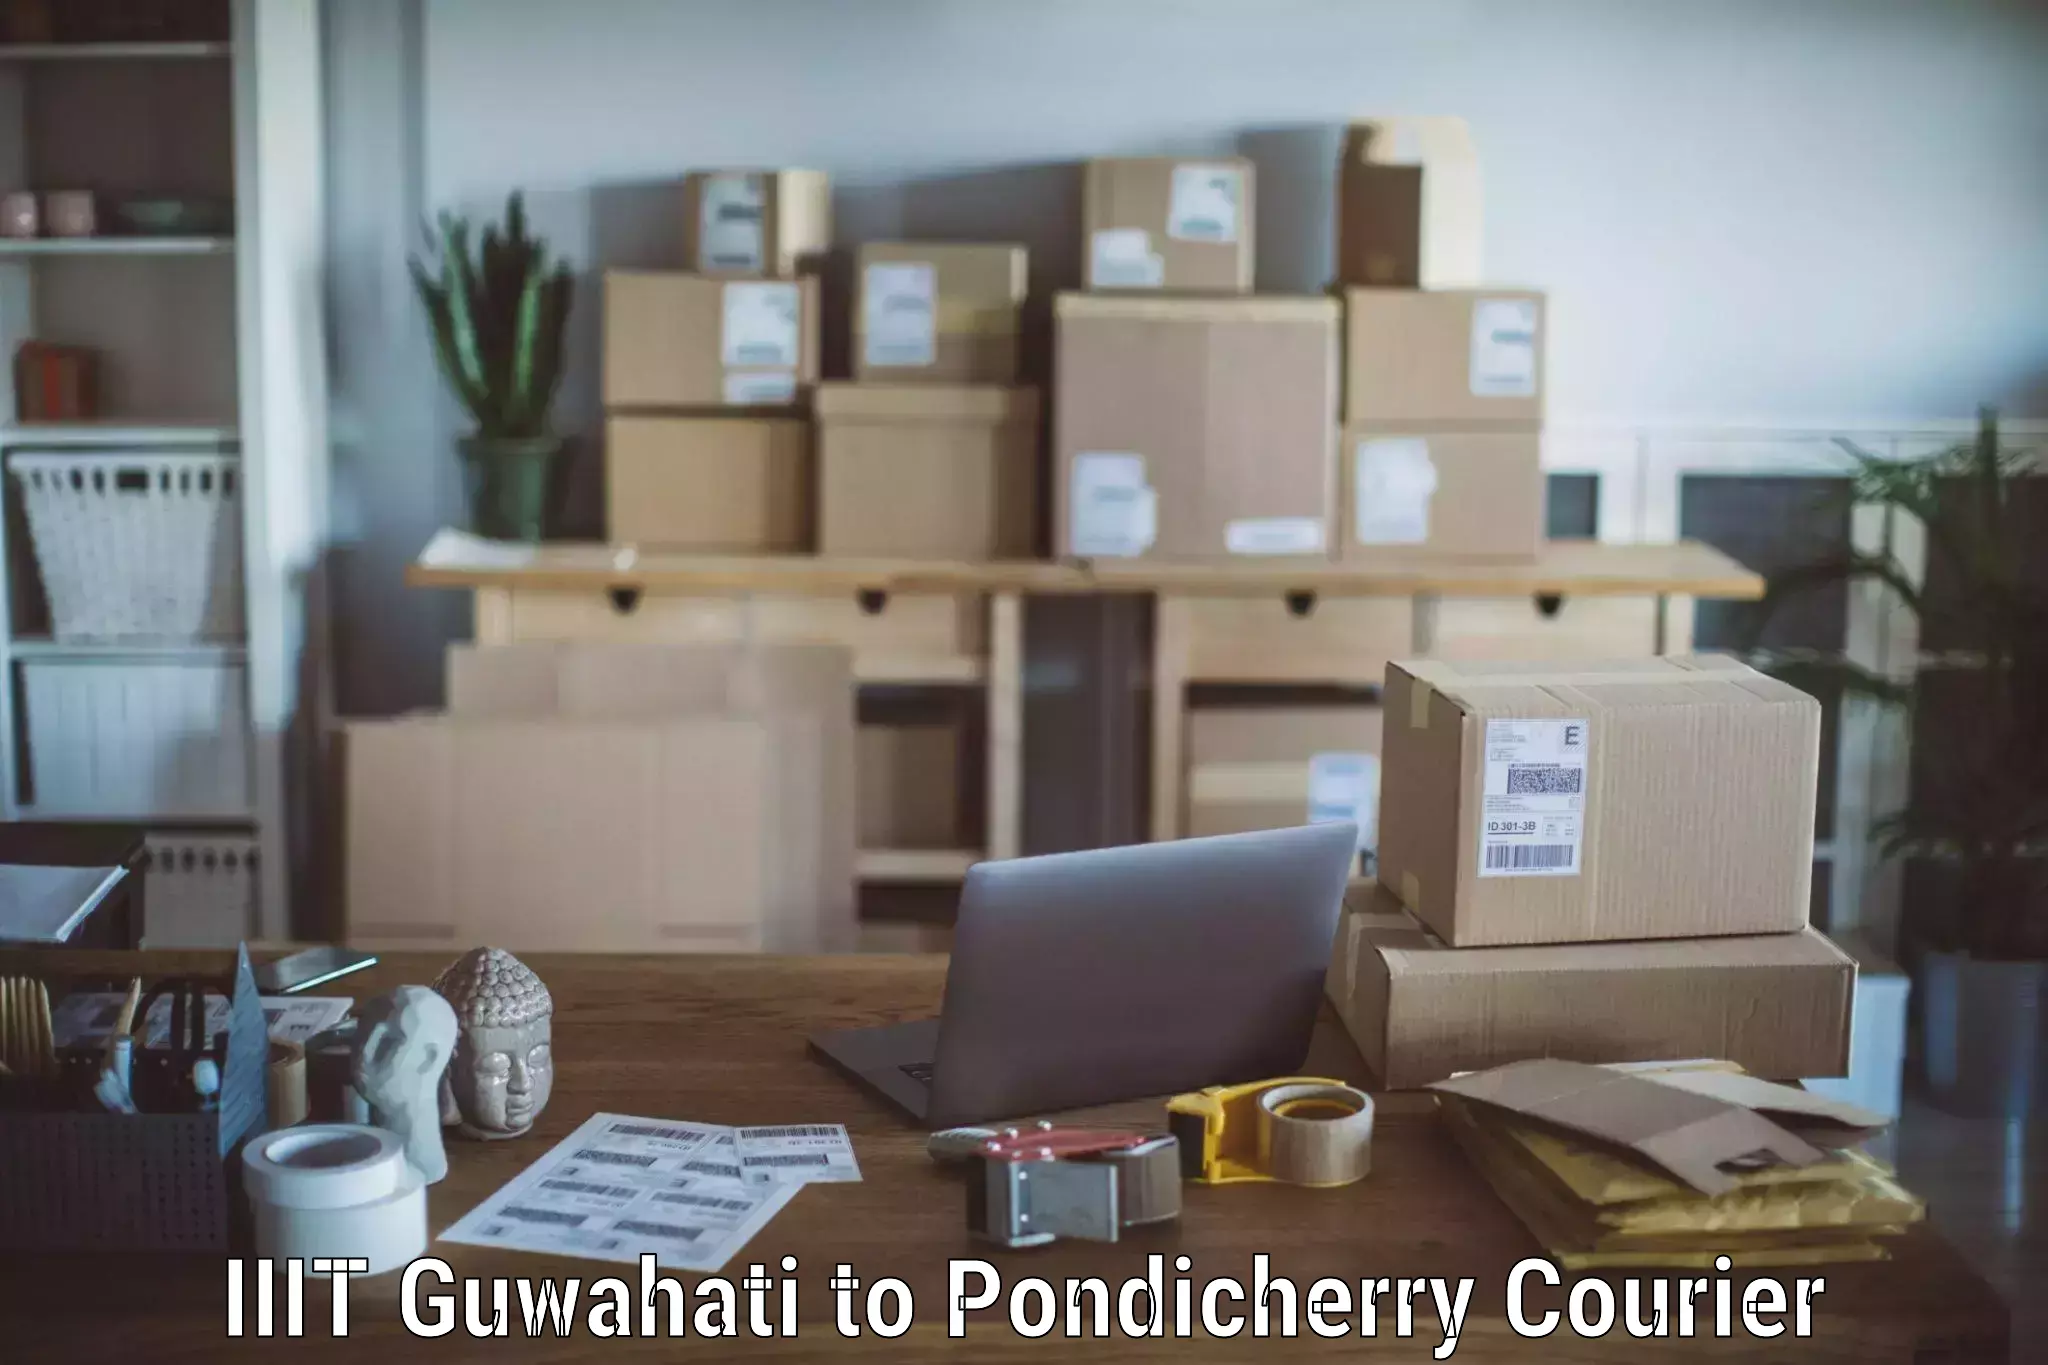 Professional moving company IIIT Guwahati to Pondicherry University